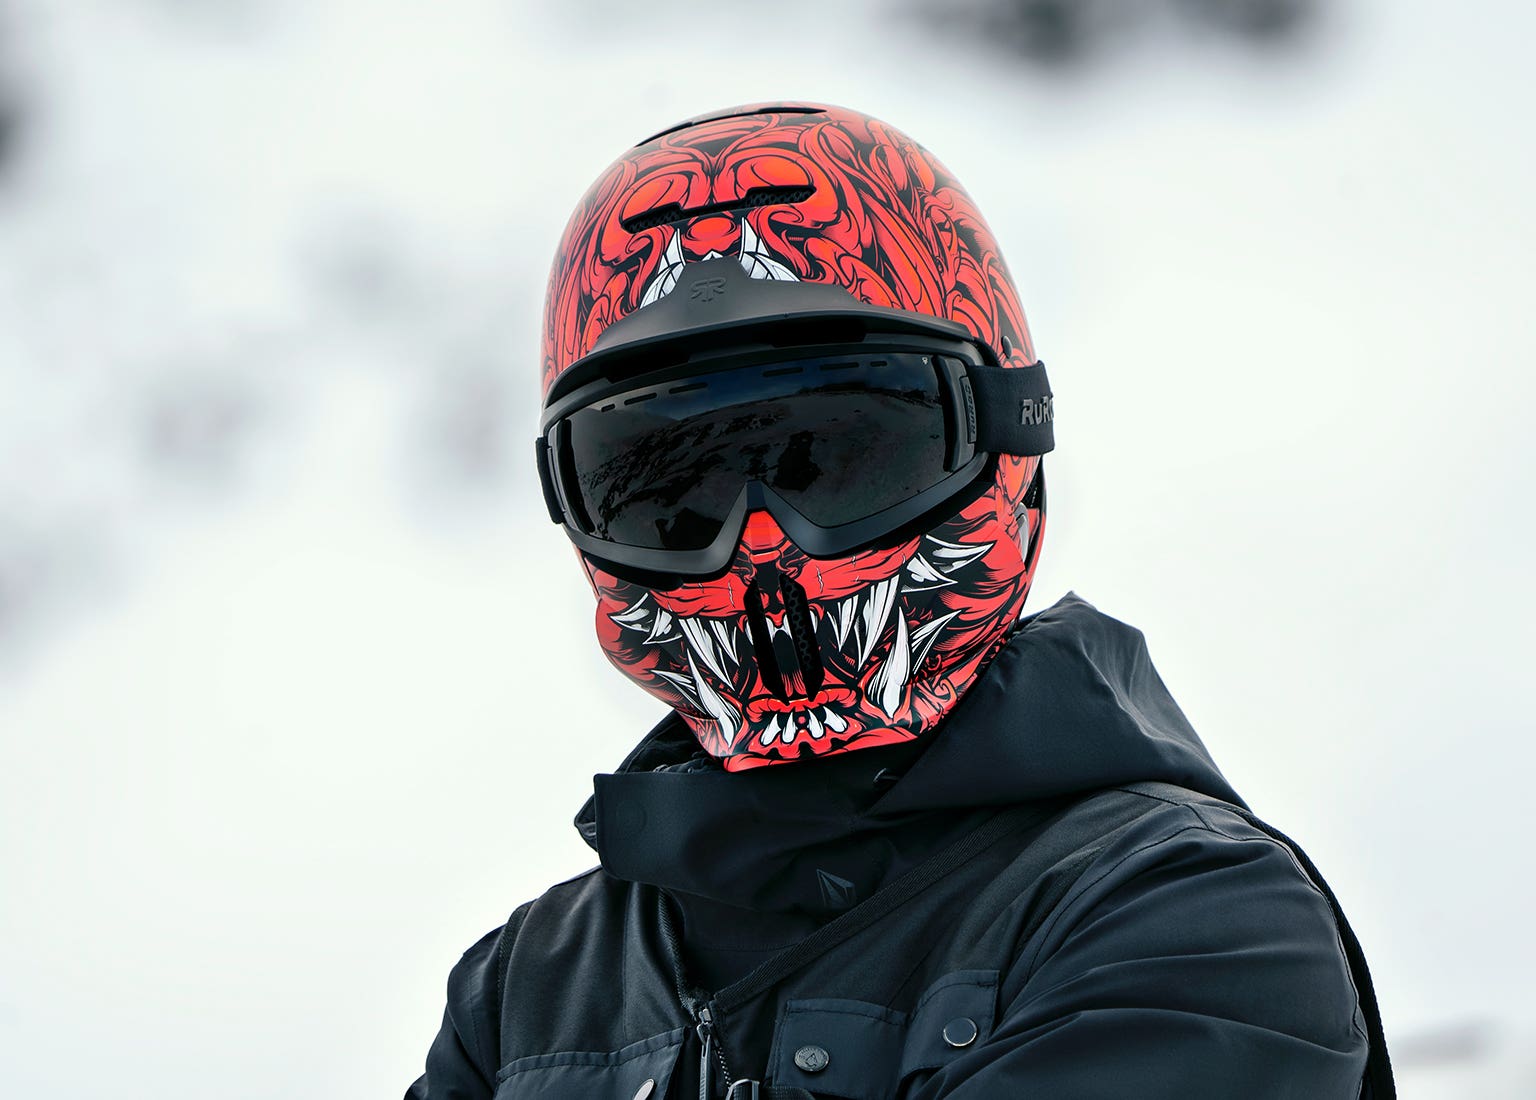 Roeam Snow Ski Helmet,Protective Helmet Skateboard Helmet Impact Resistance Ventilation Ski Helmet for Adults Skiing Motorcycle Cycling Snowmobile Snowboarding